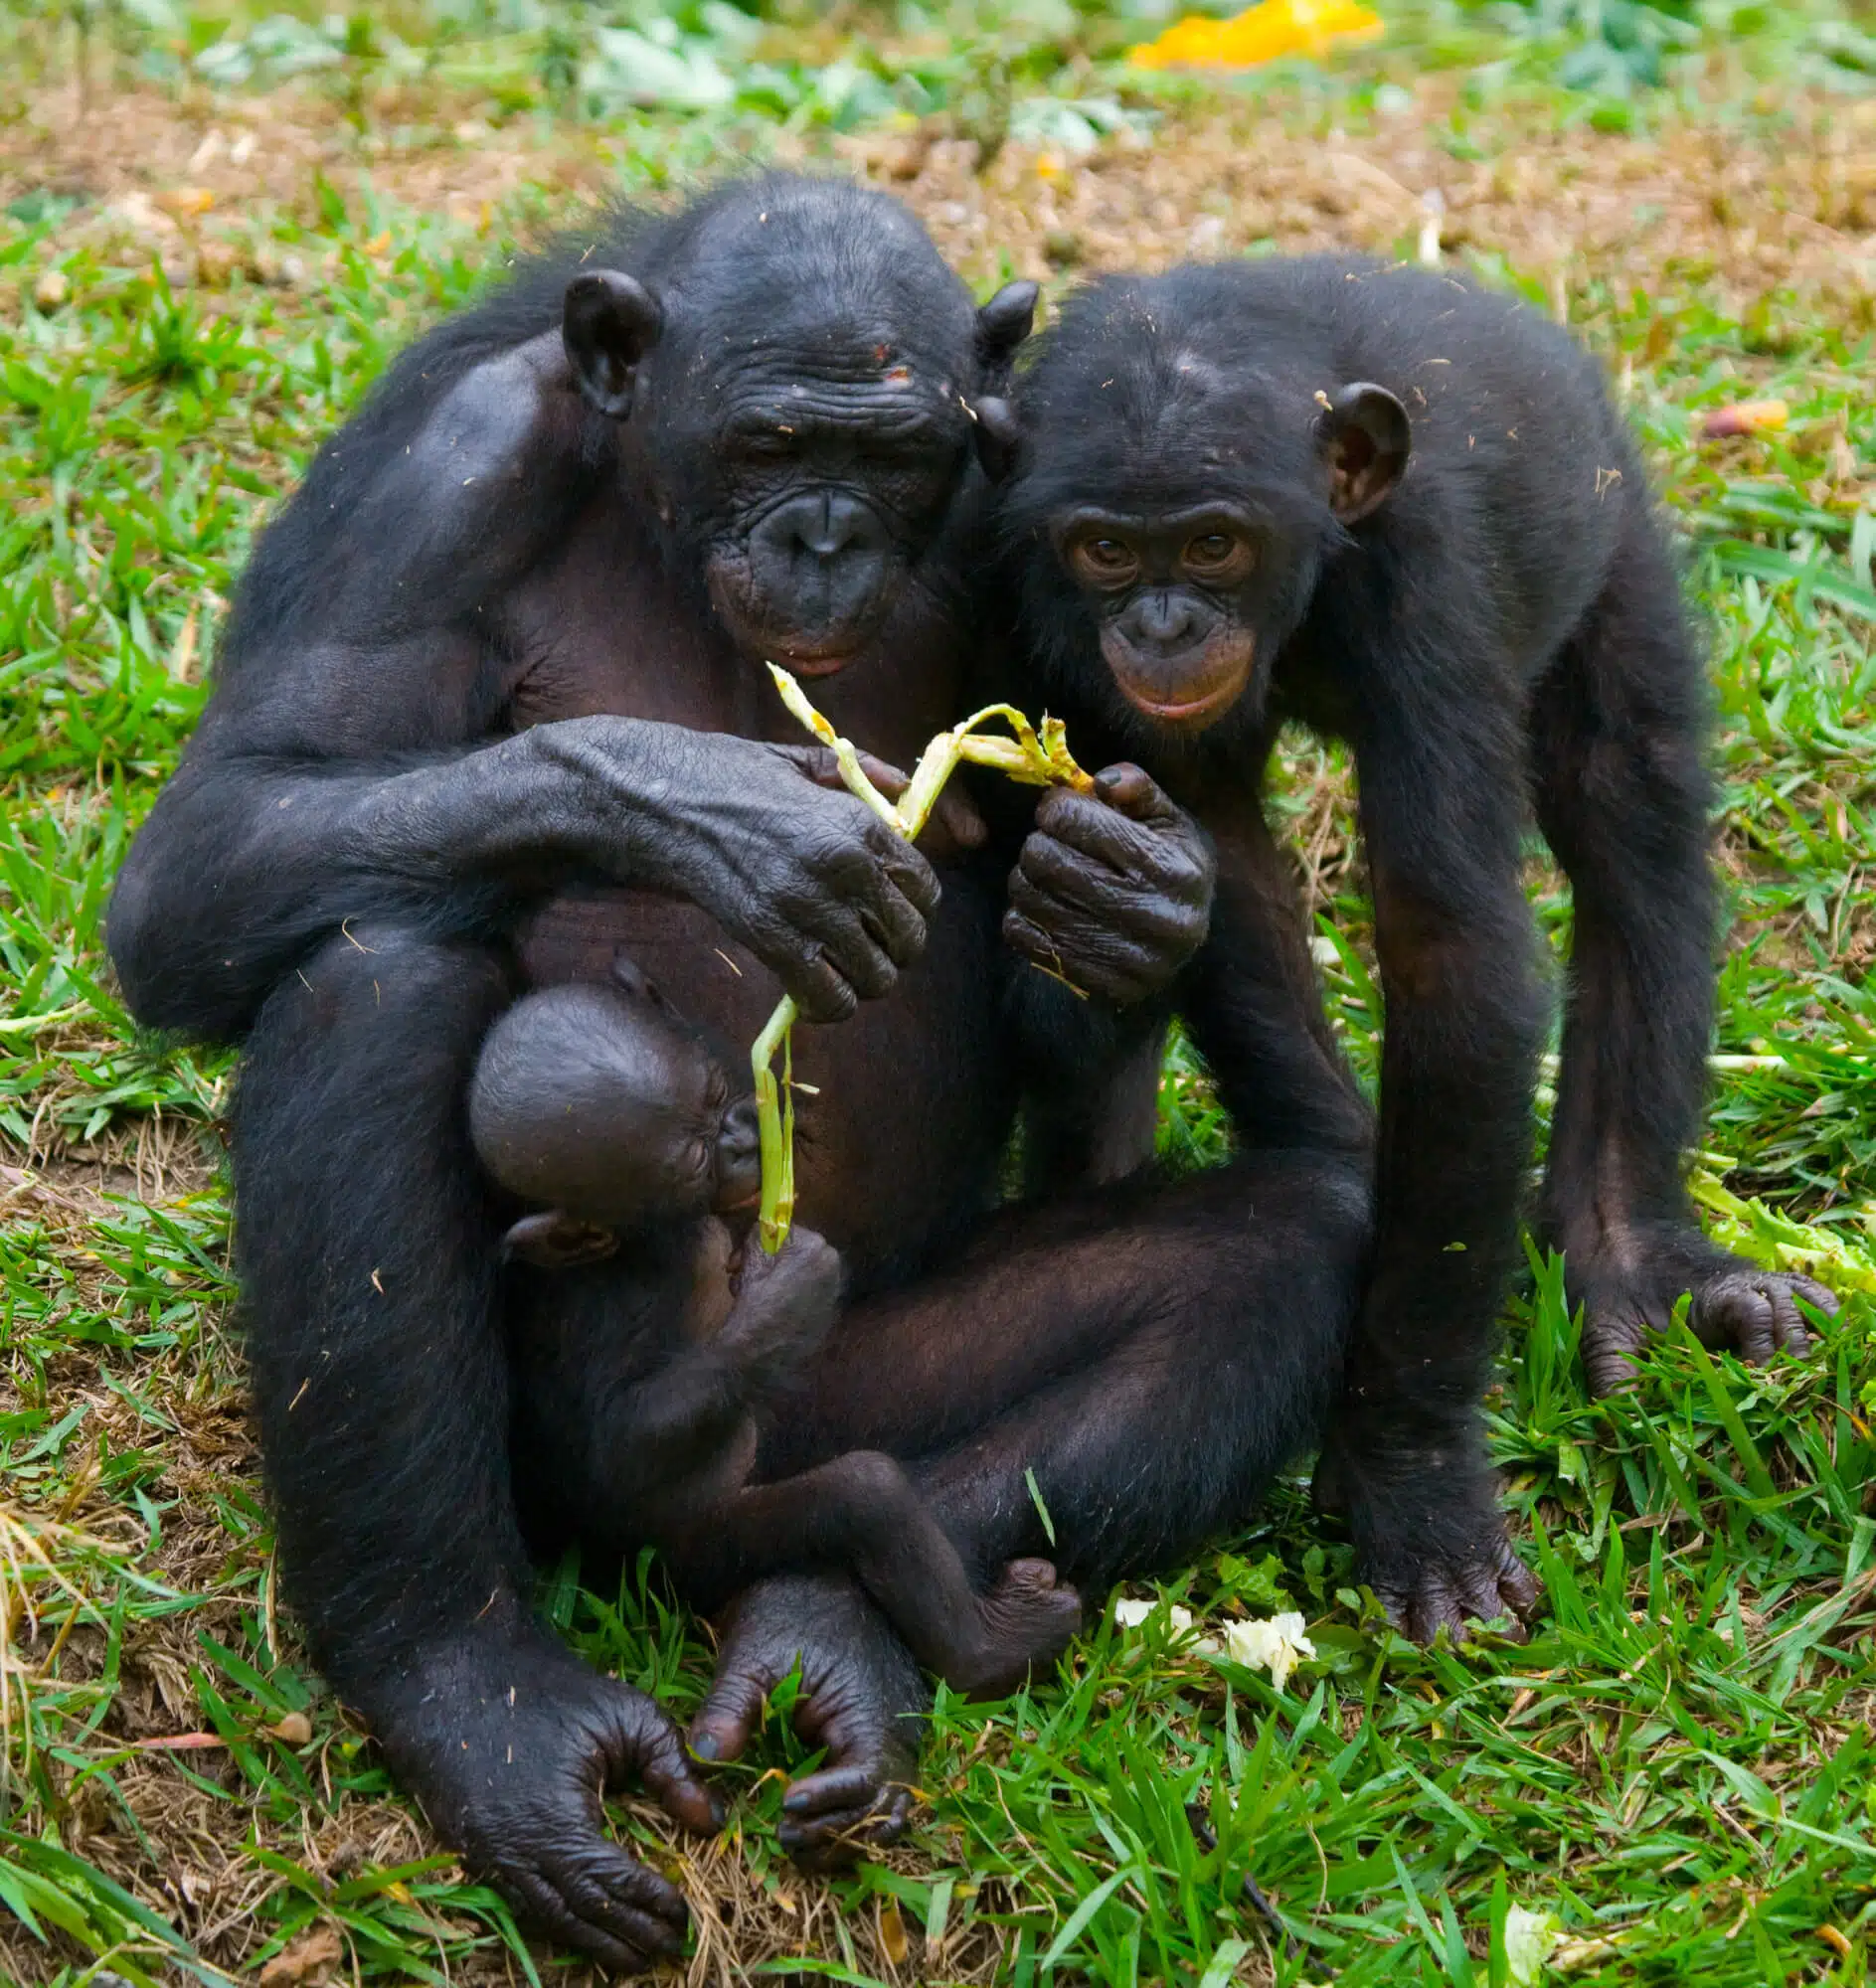 Two bonobo chimpanzees and a bonobo baby. Image: depositphotos.com